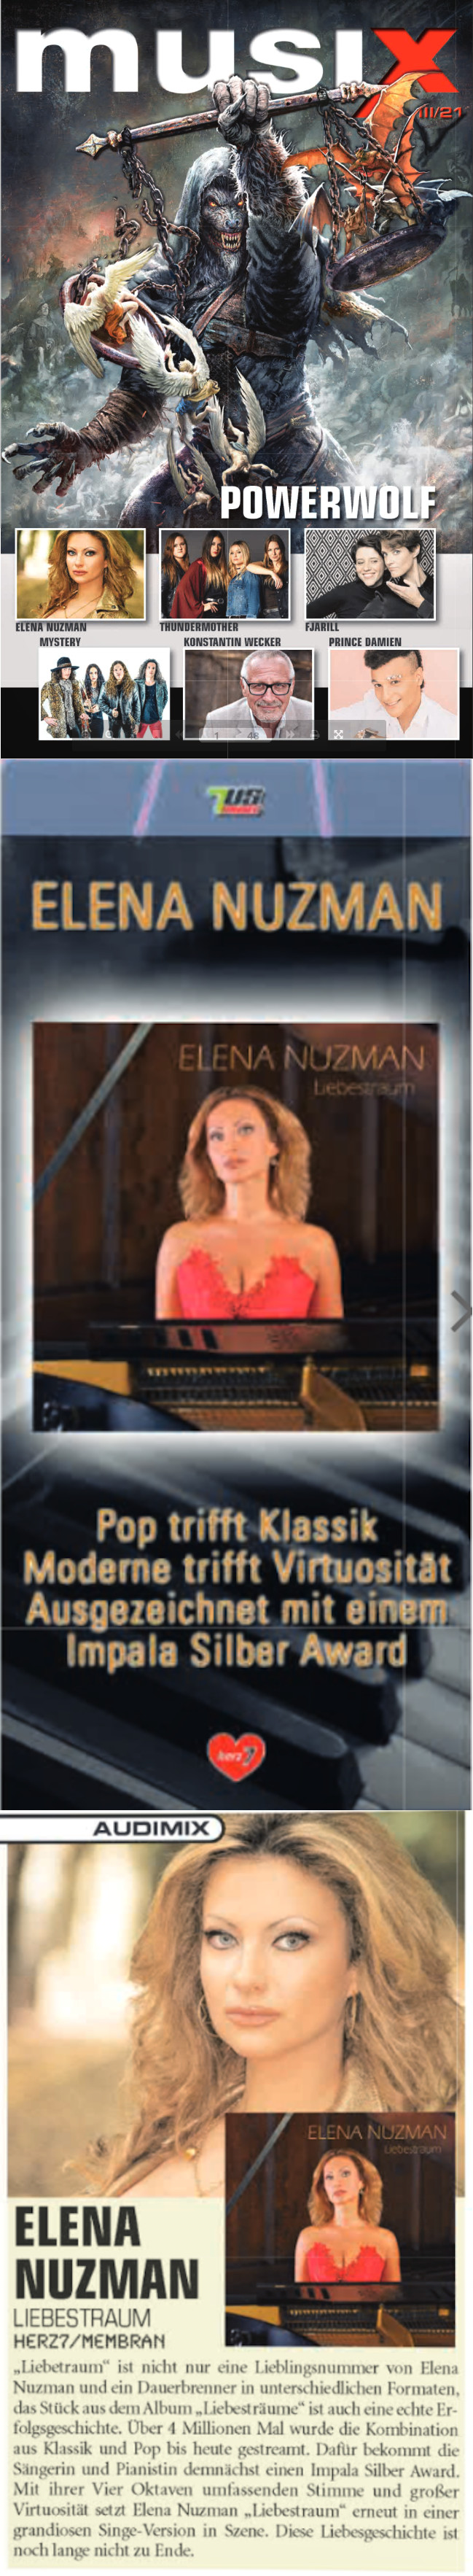 Elena Nuzman - musix.de - epaper - Juli 2021